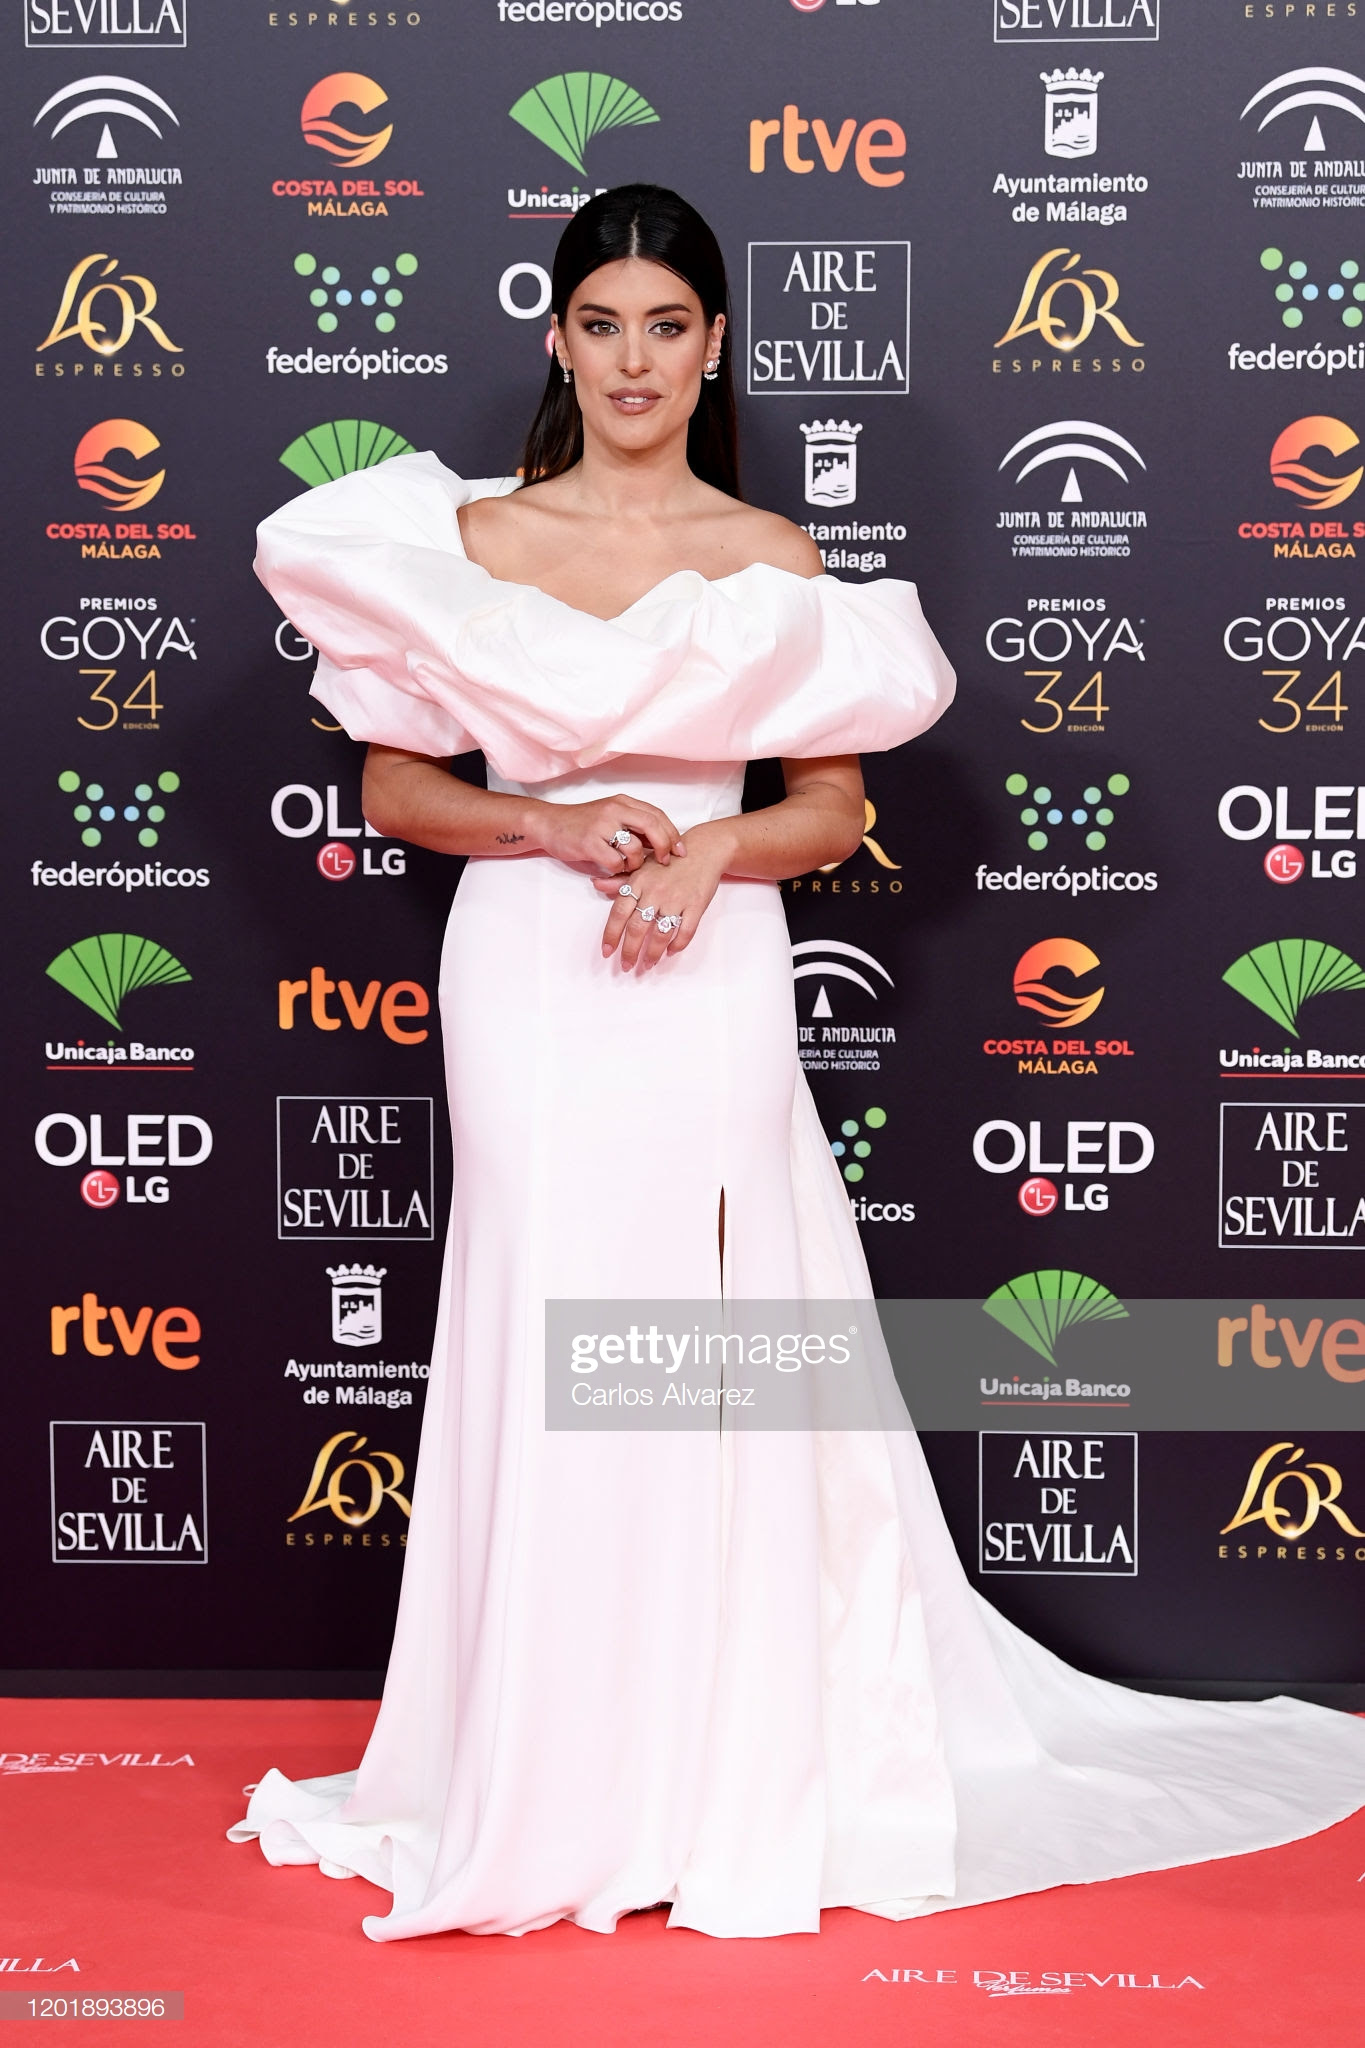 Premios Goya 2020 vestidos